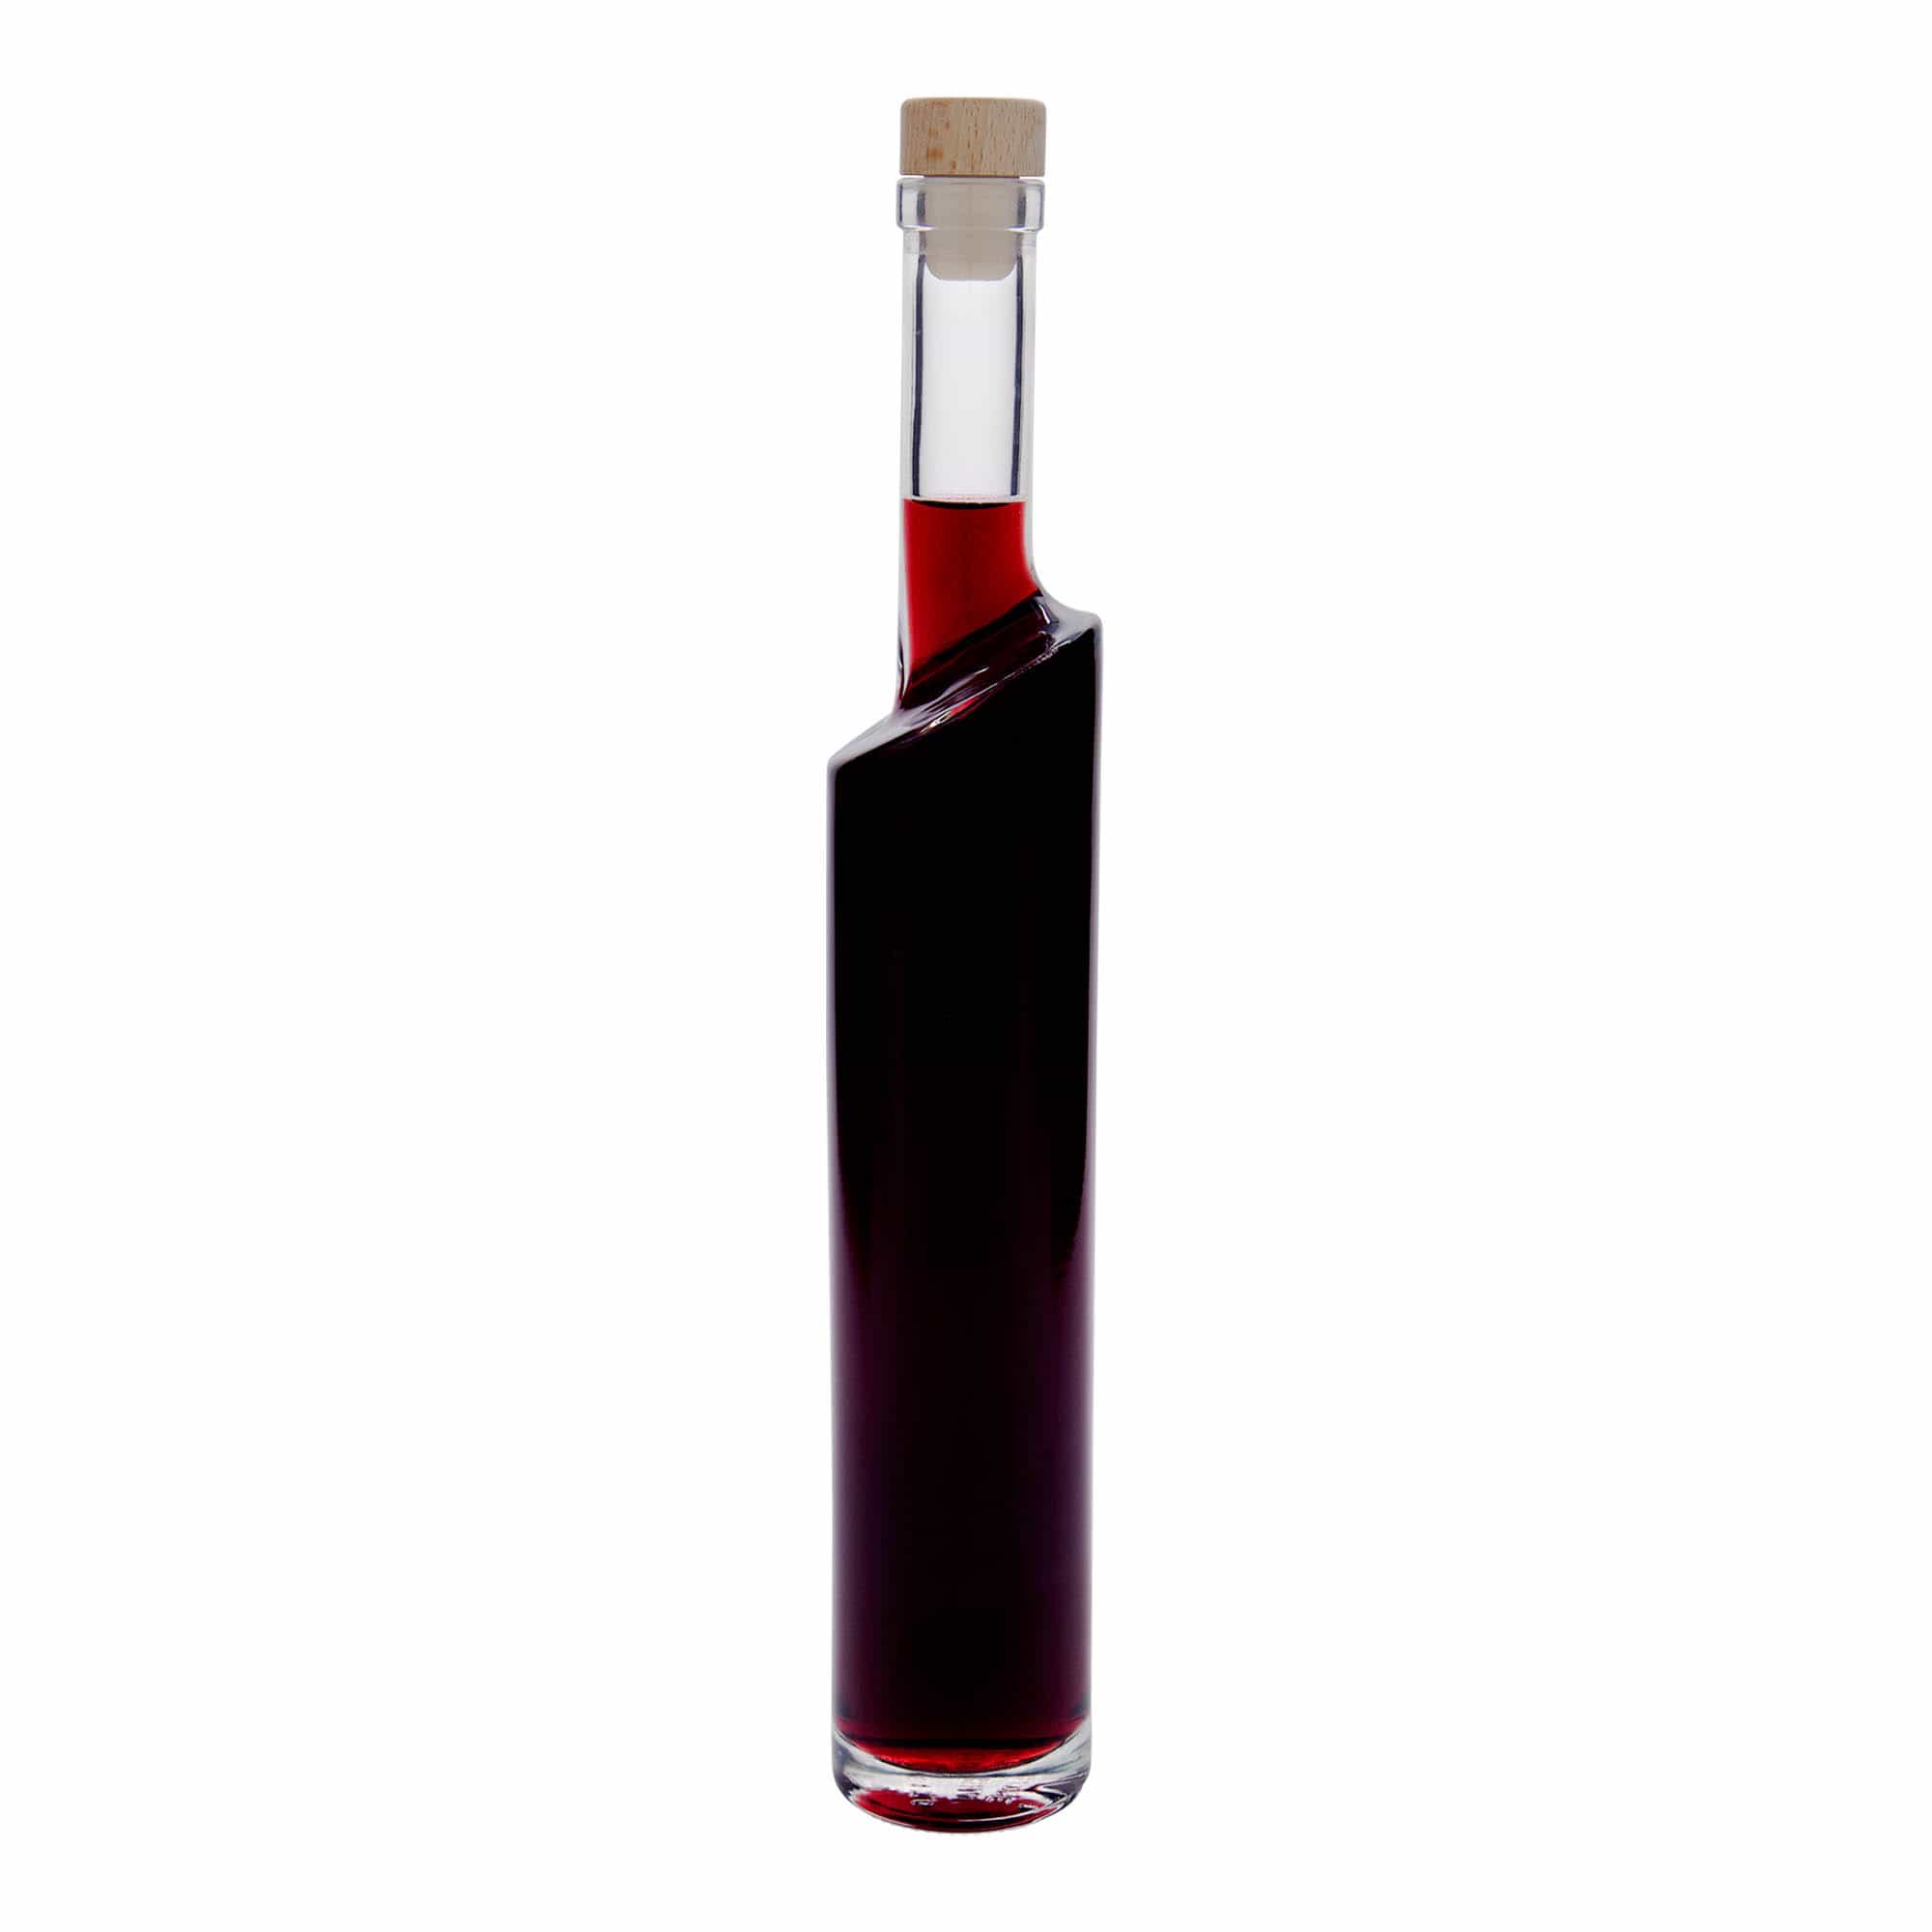 350 ml glass bottle 'Feeling', closure: cork